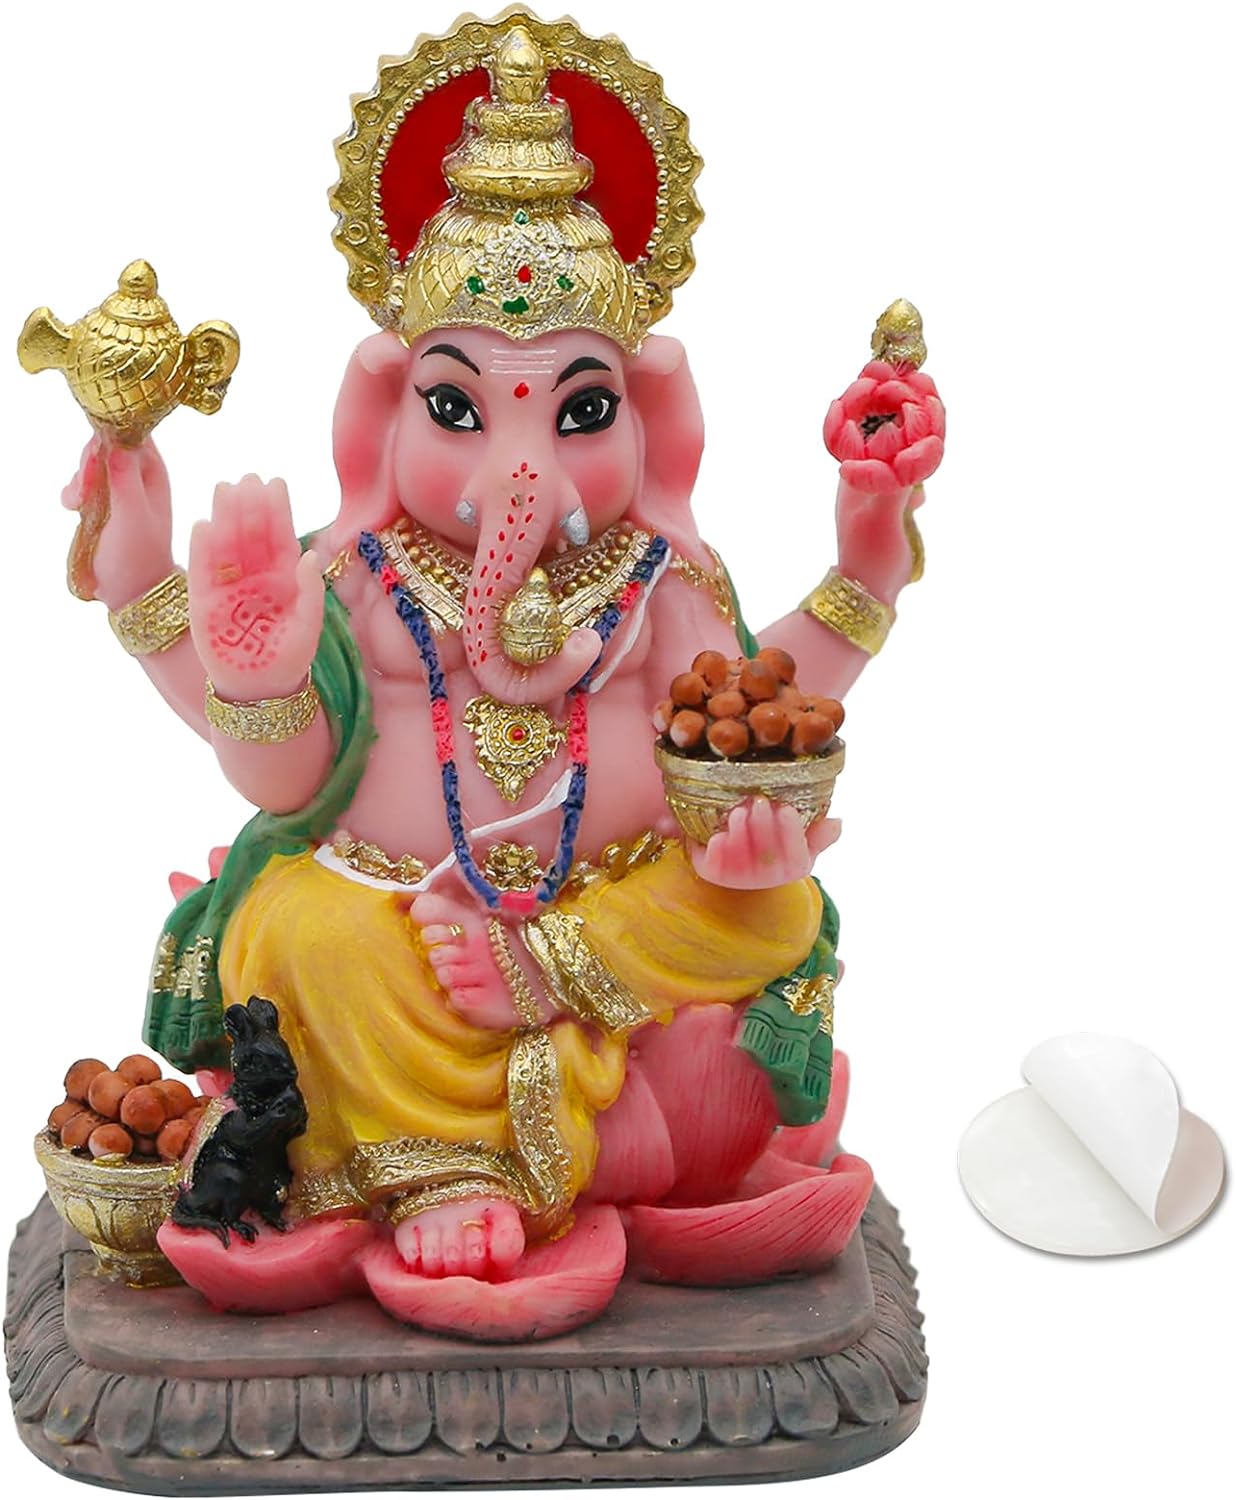 alikiki Indian God Lord Ganesha Statue - 4.1”H Multicolor Hindu Idol Ganesh for Car Dashboard Decor India Murit Home Office Mandir Temple Altar Pooja Item Diwali Puja Gifts